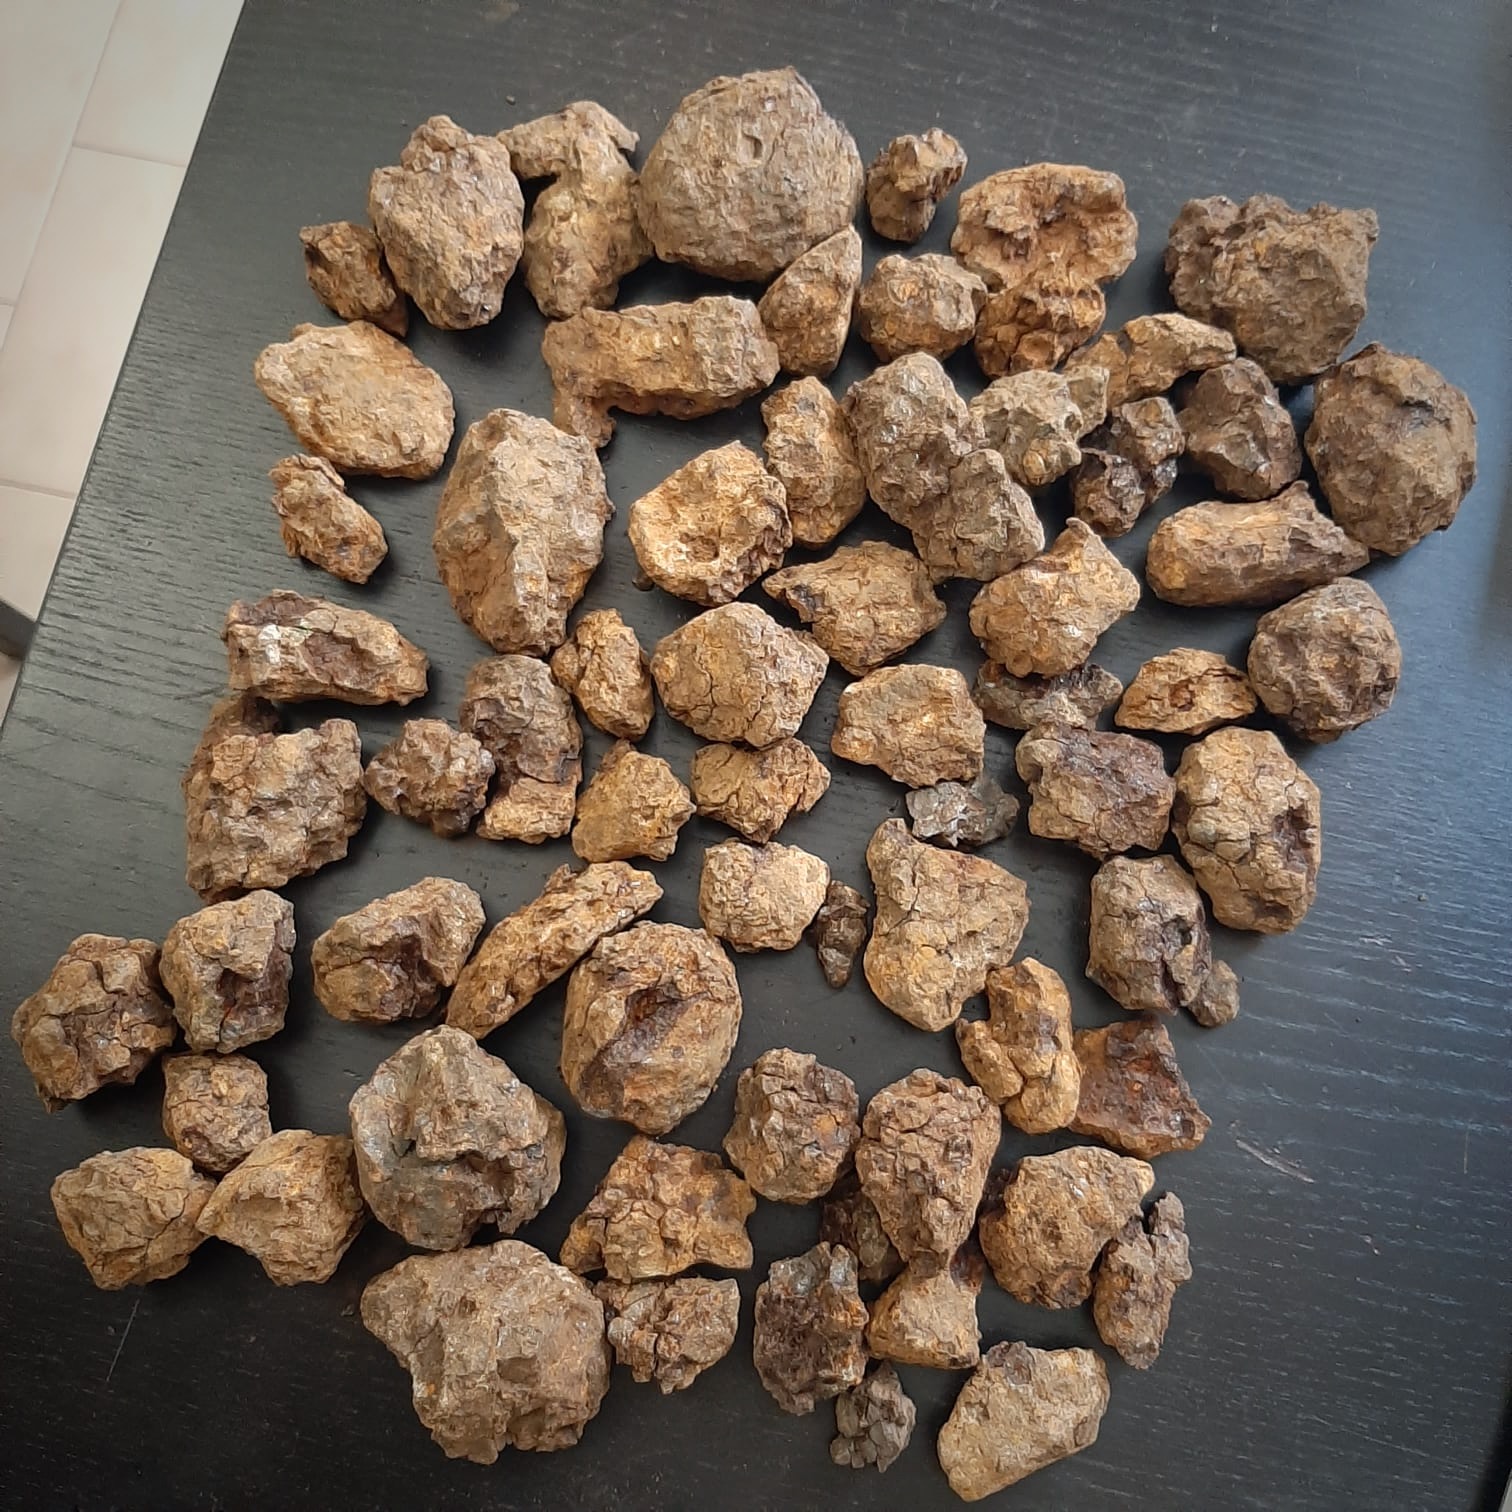 Sericho pallasite meteorite. Wholesale lot.